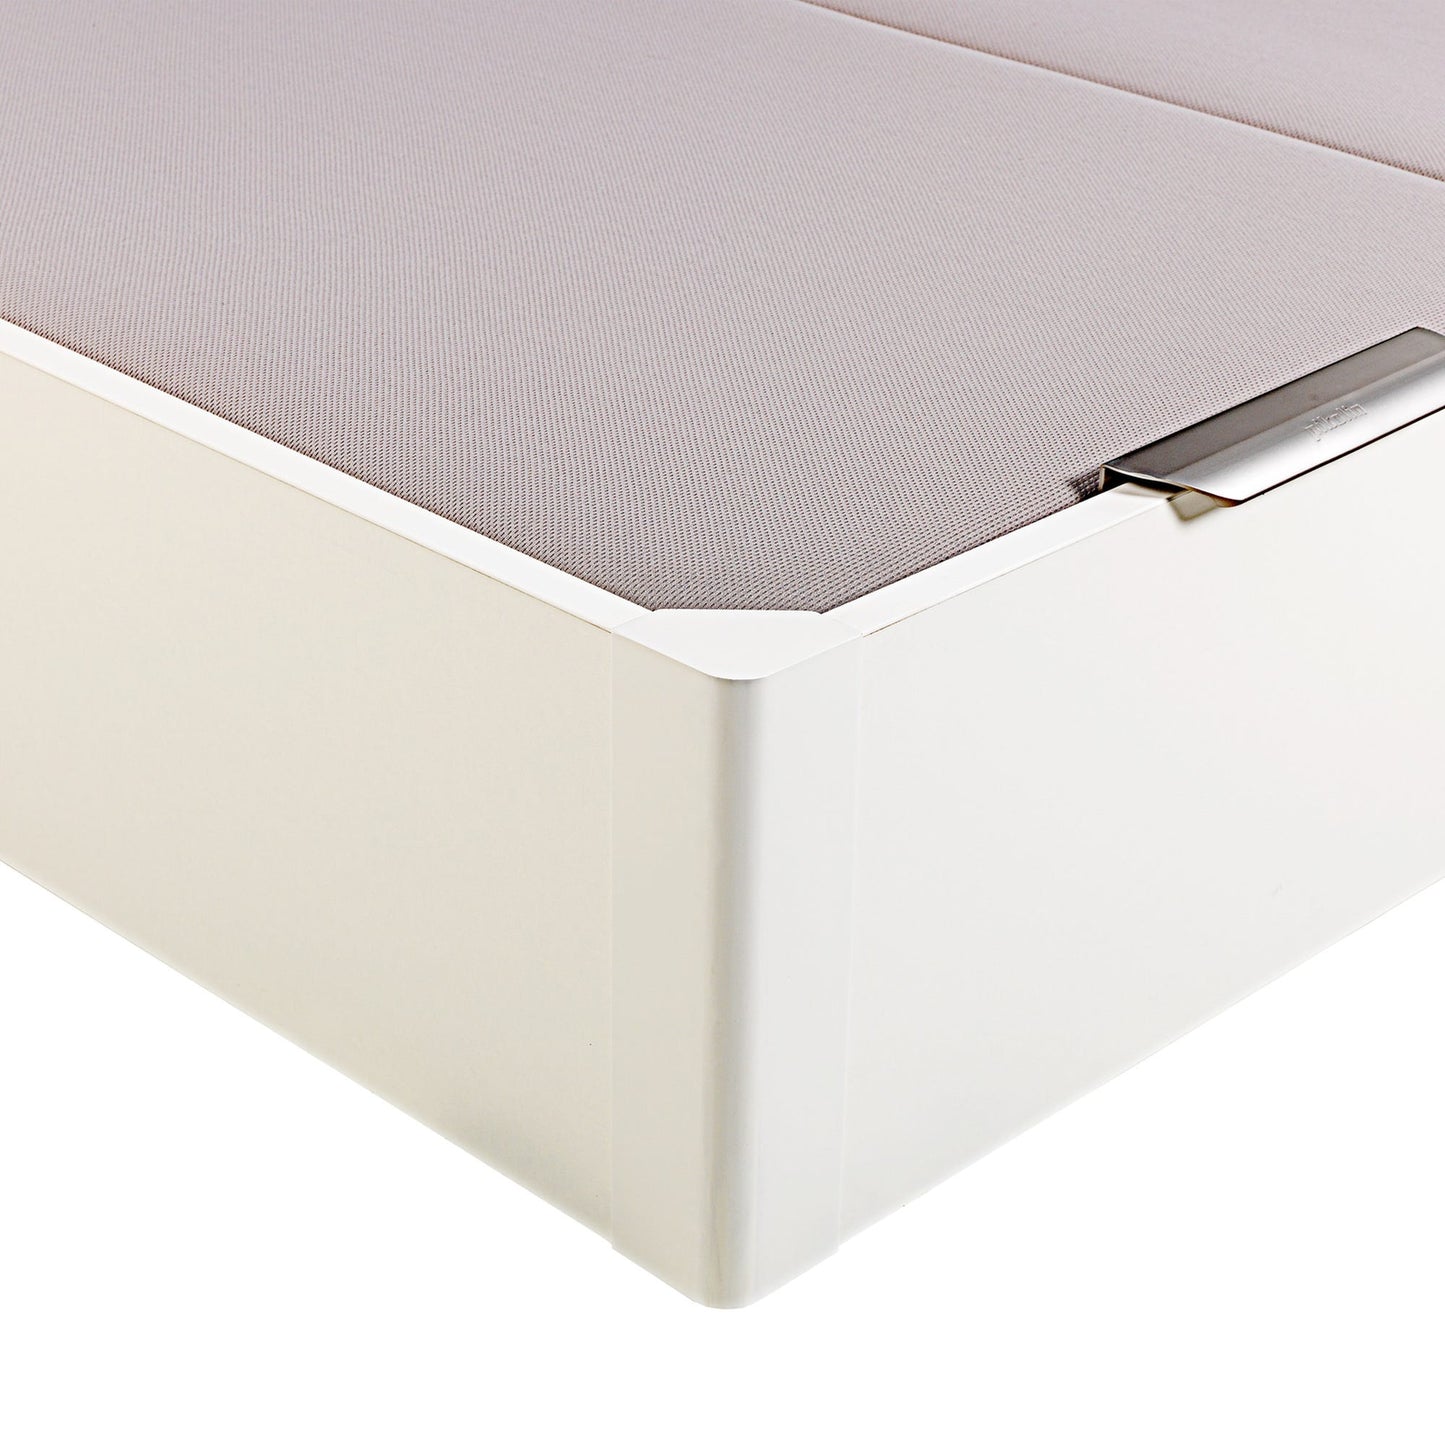 Canapé abatible de madera de alta capacidad tapa doble de color blanco - DESIGN - 200x190